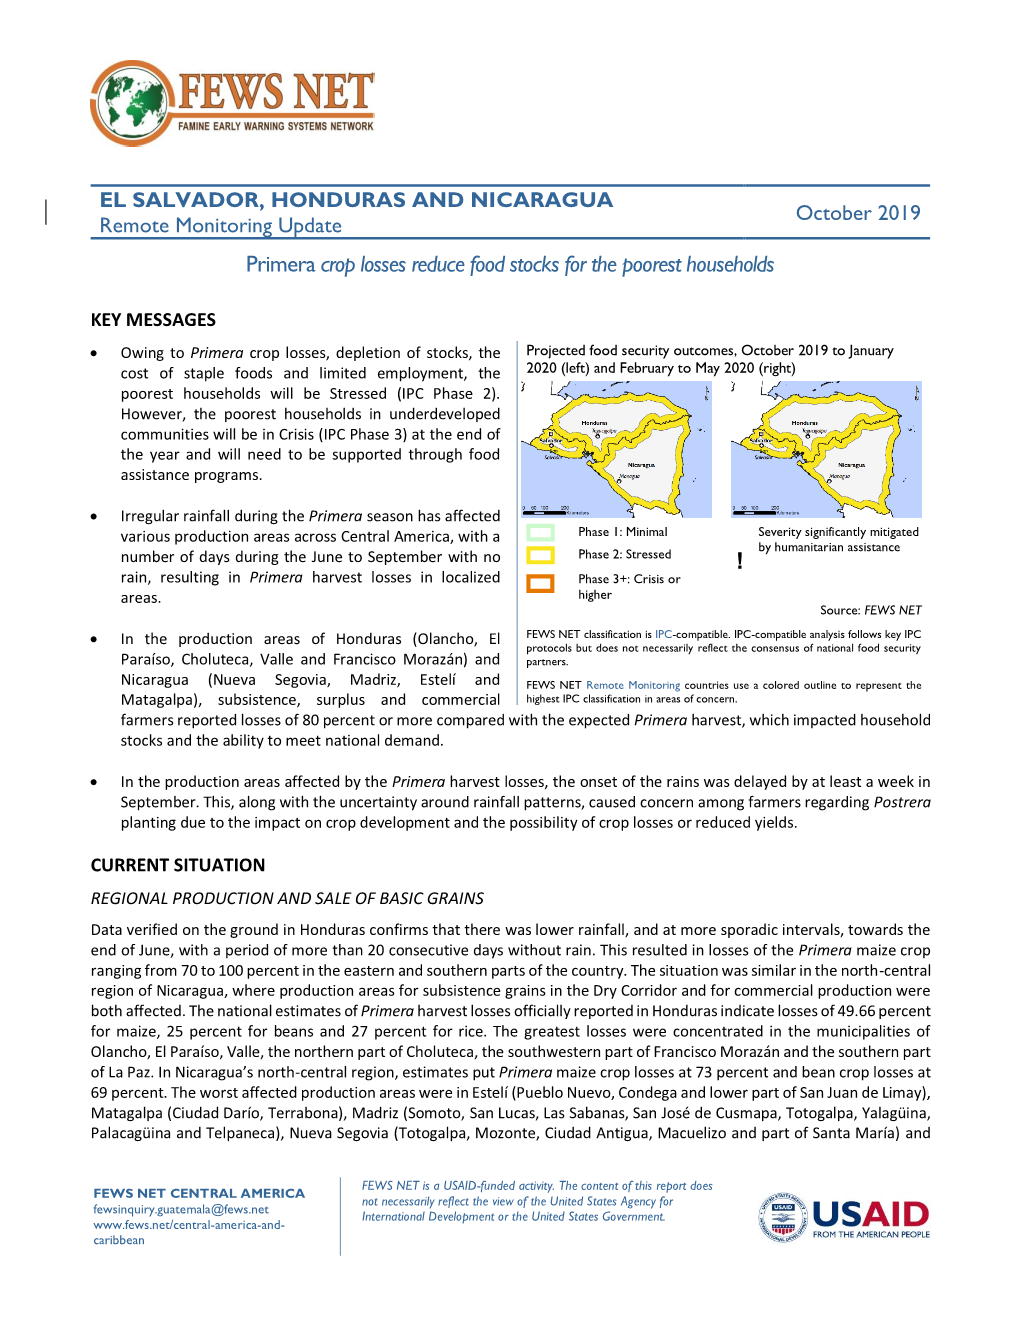 Remote Monitoring Update, El Salvador, Nicaragua and Honduras